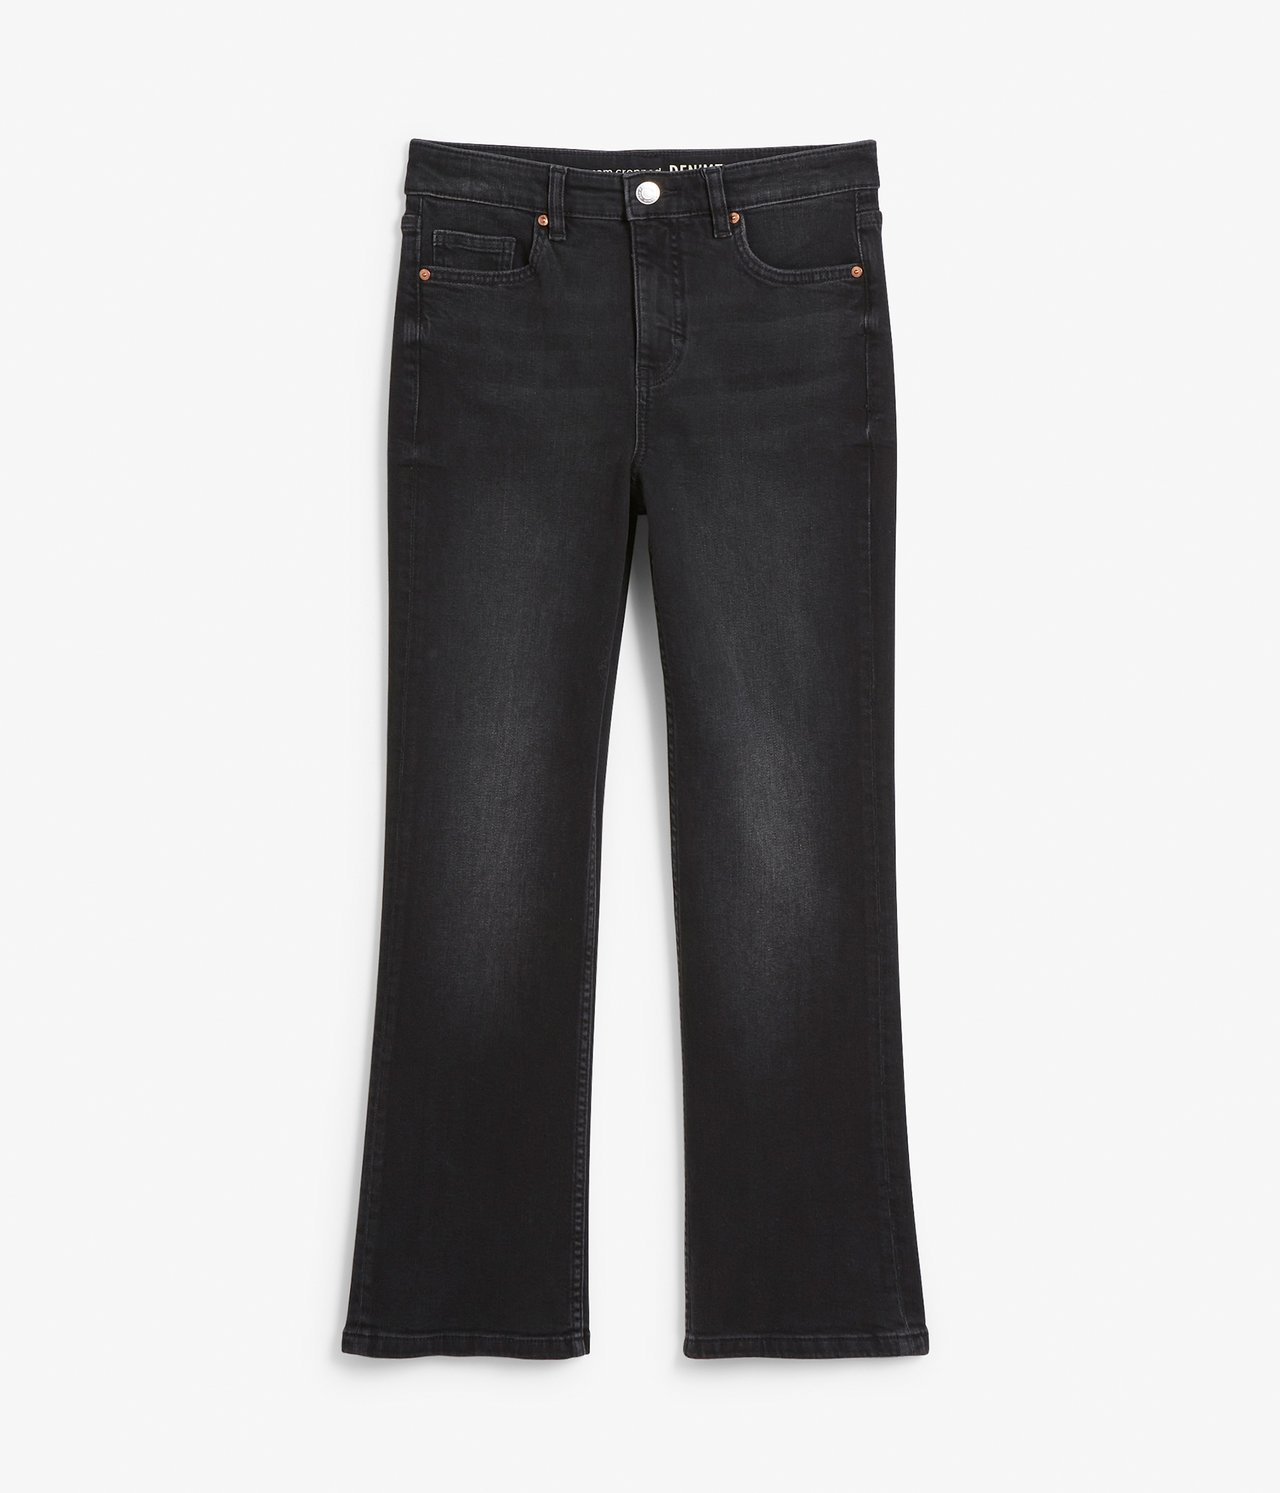 Cropped flare jeans regular waist - Pesty musta denimi - 6